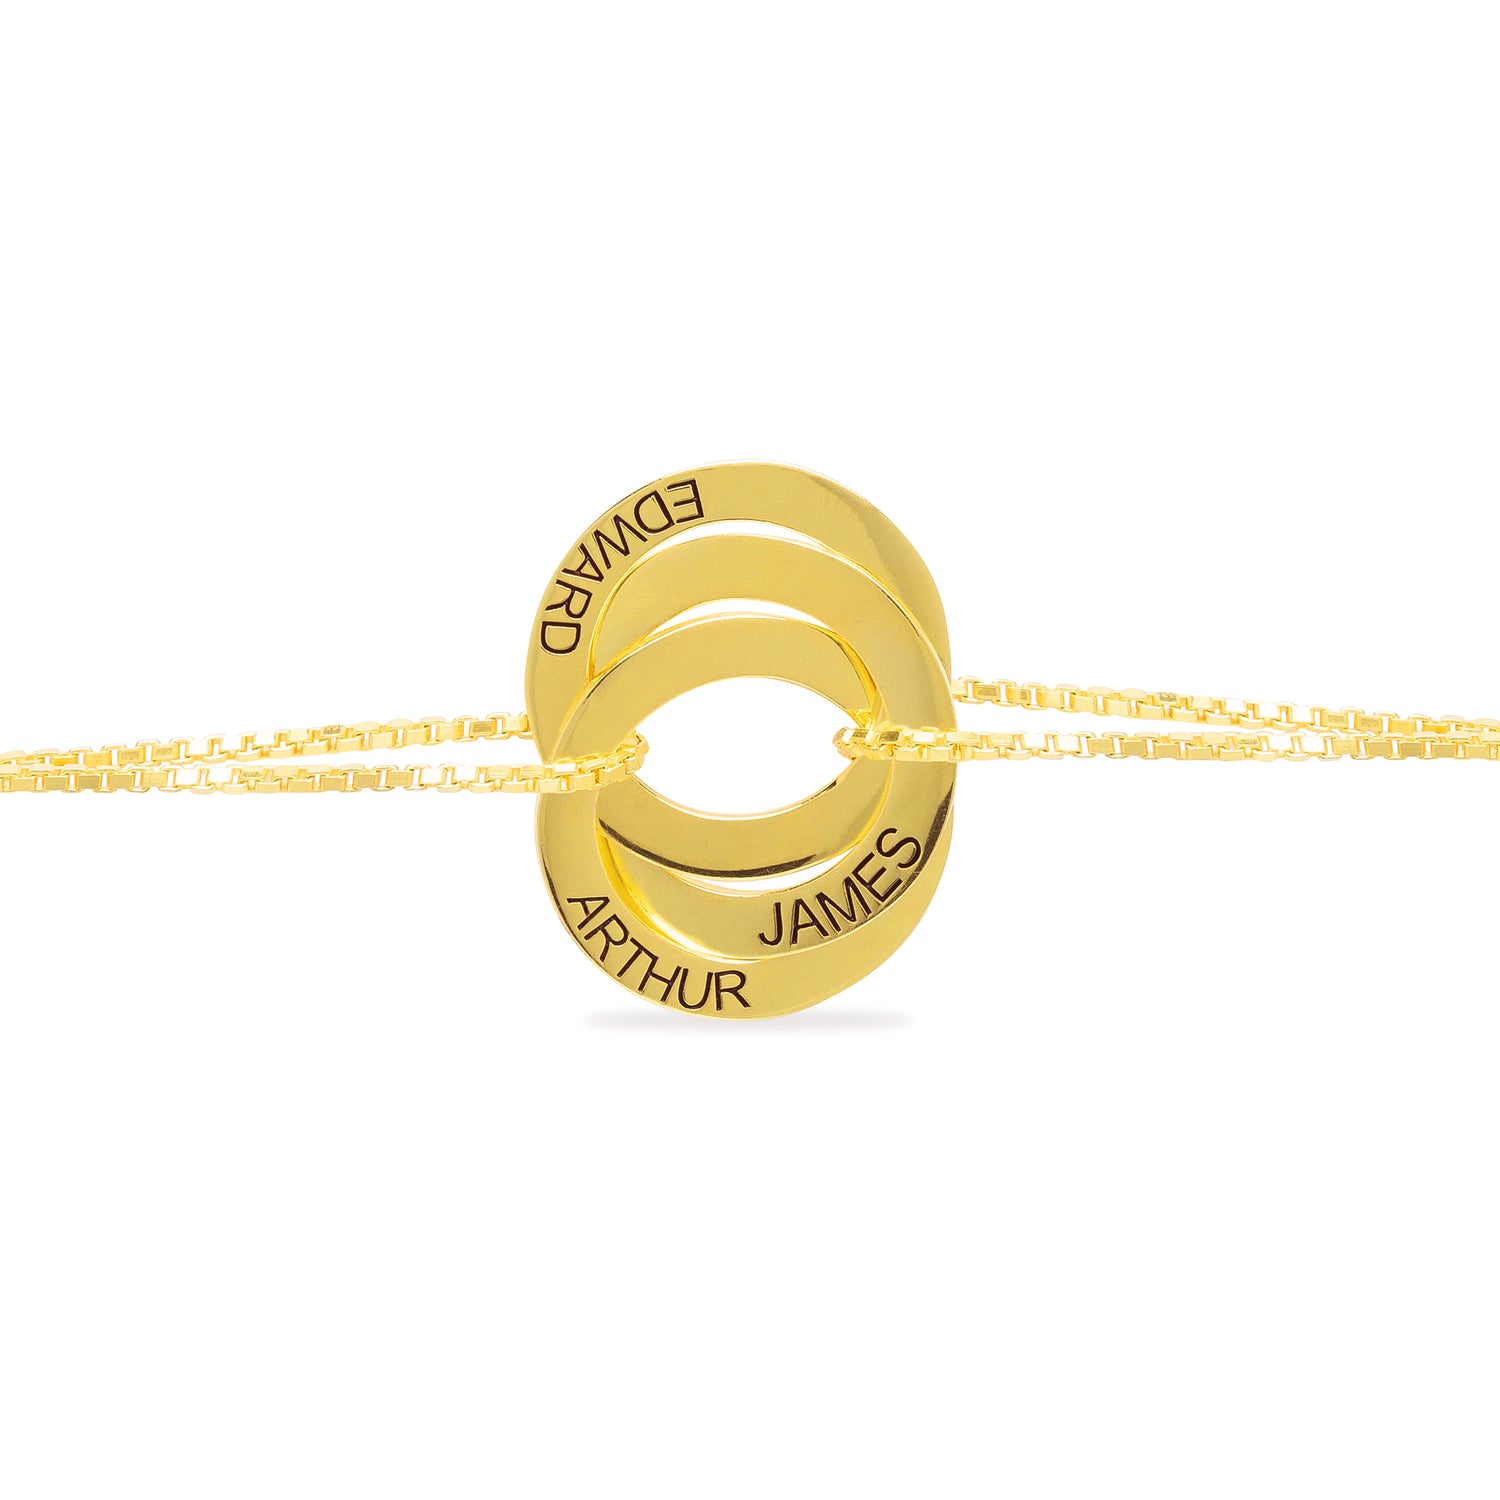 Interlinked Russian Ring Bracelet